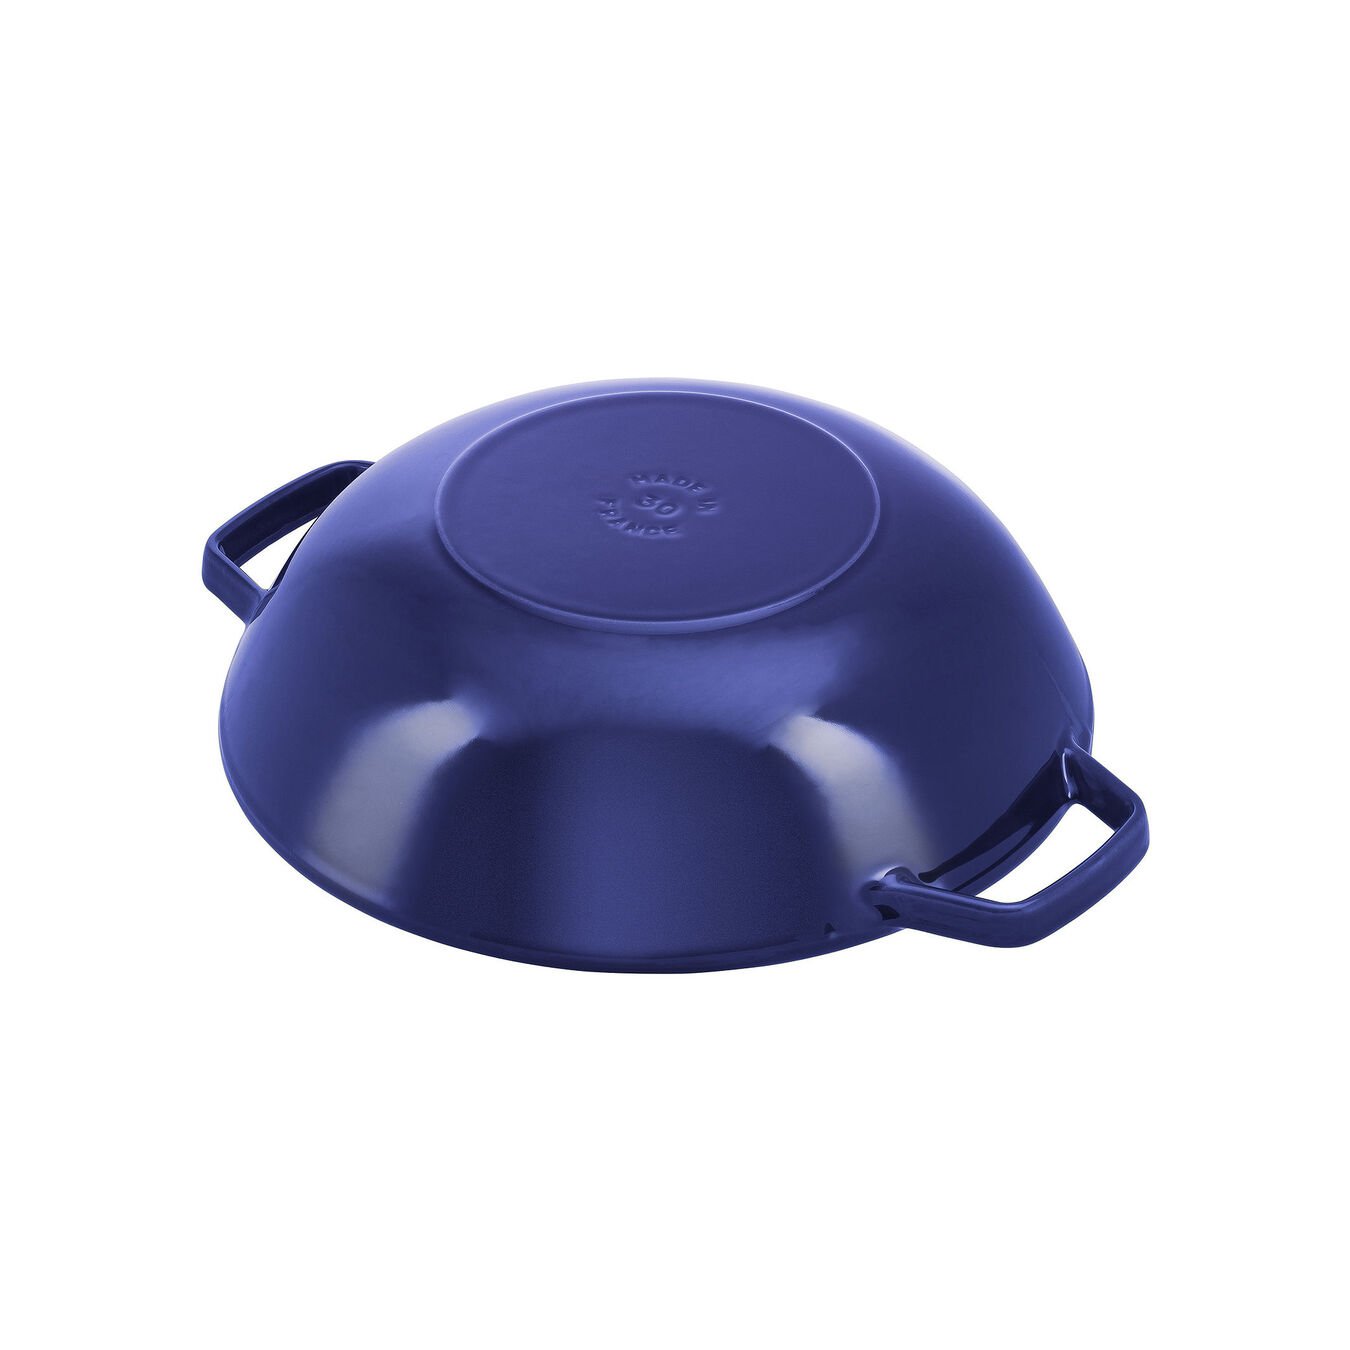 30 cm Cast iron Wok with glass lid dark-blue,,large 3